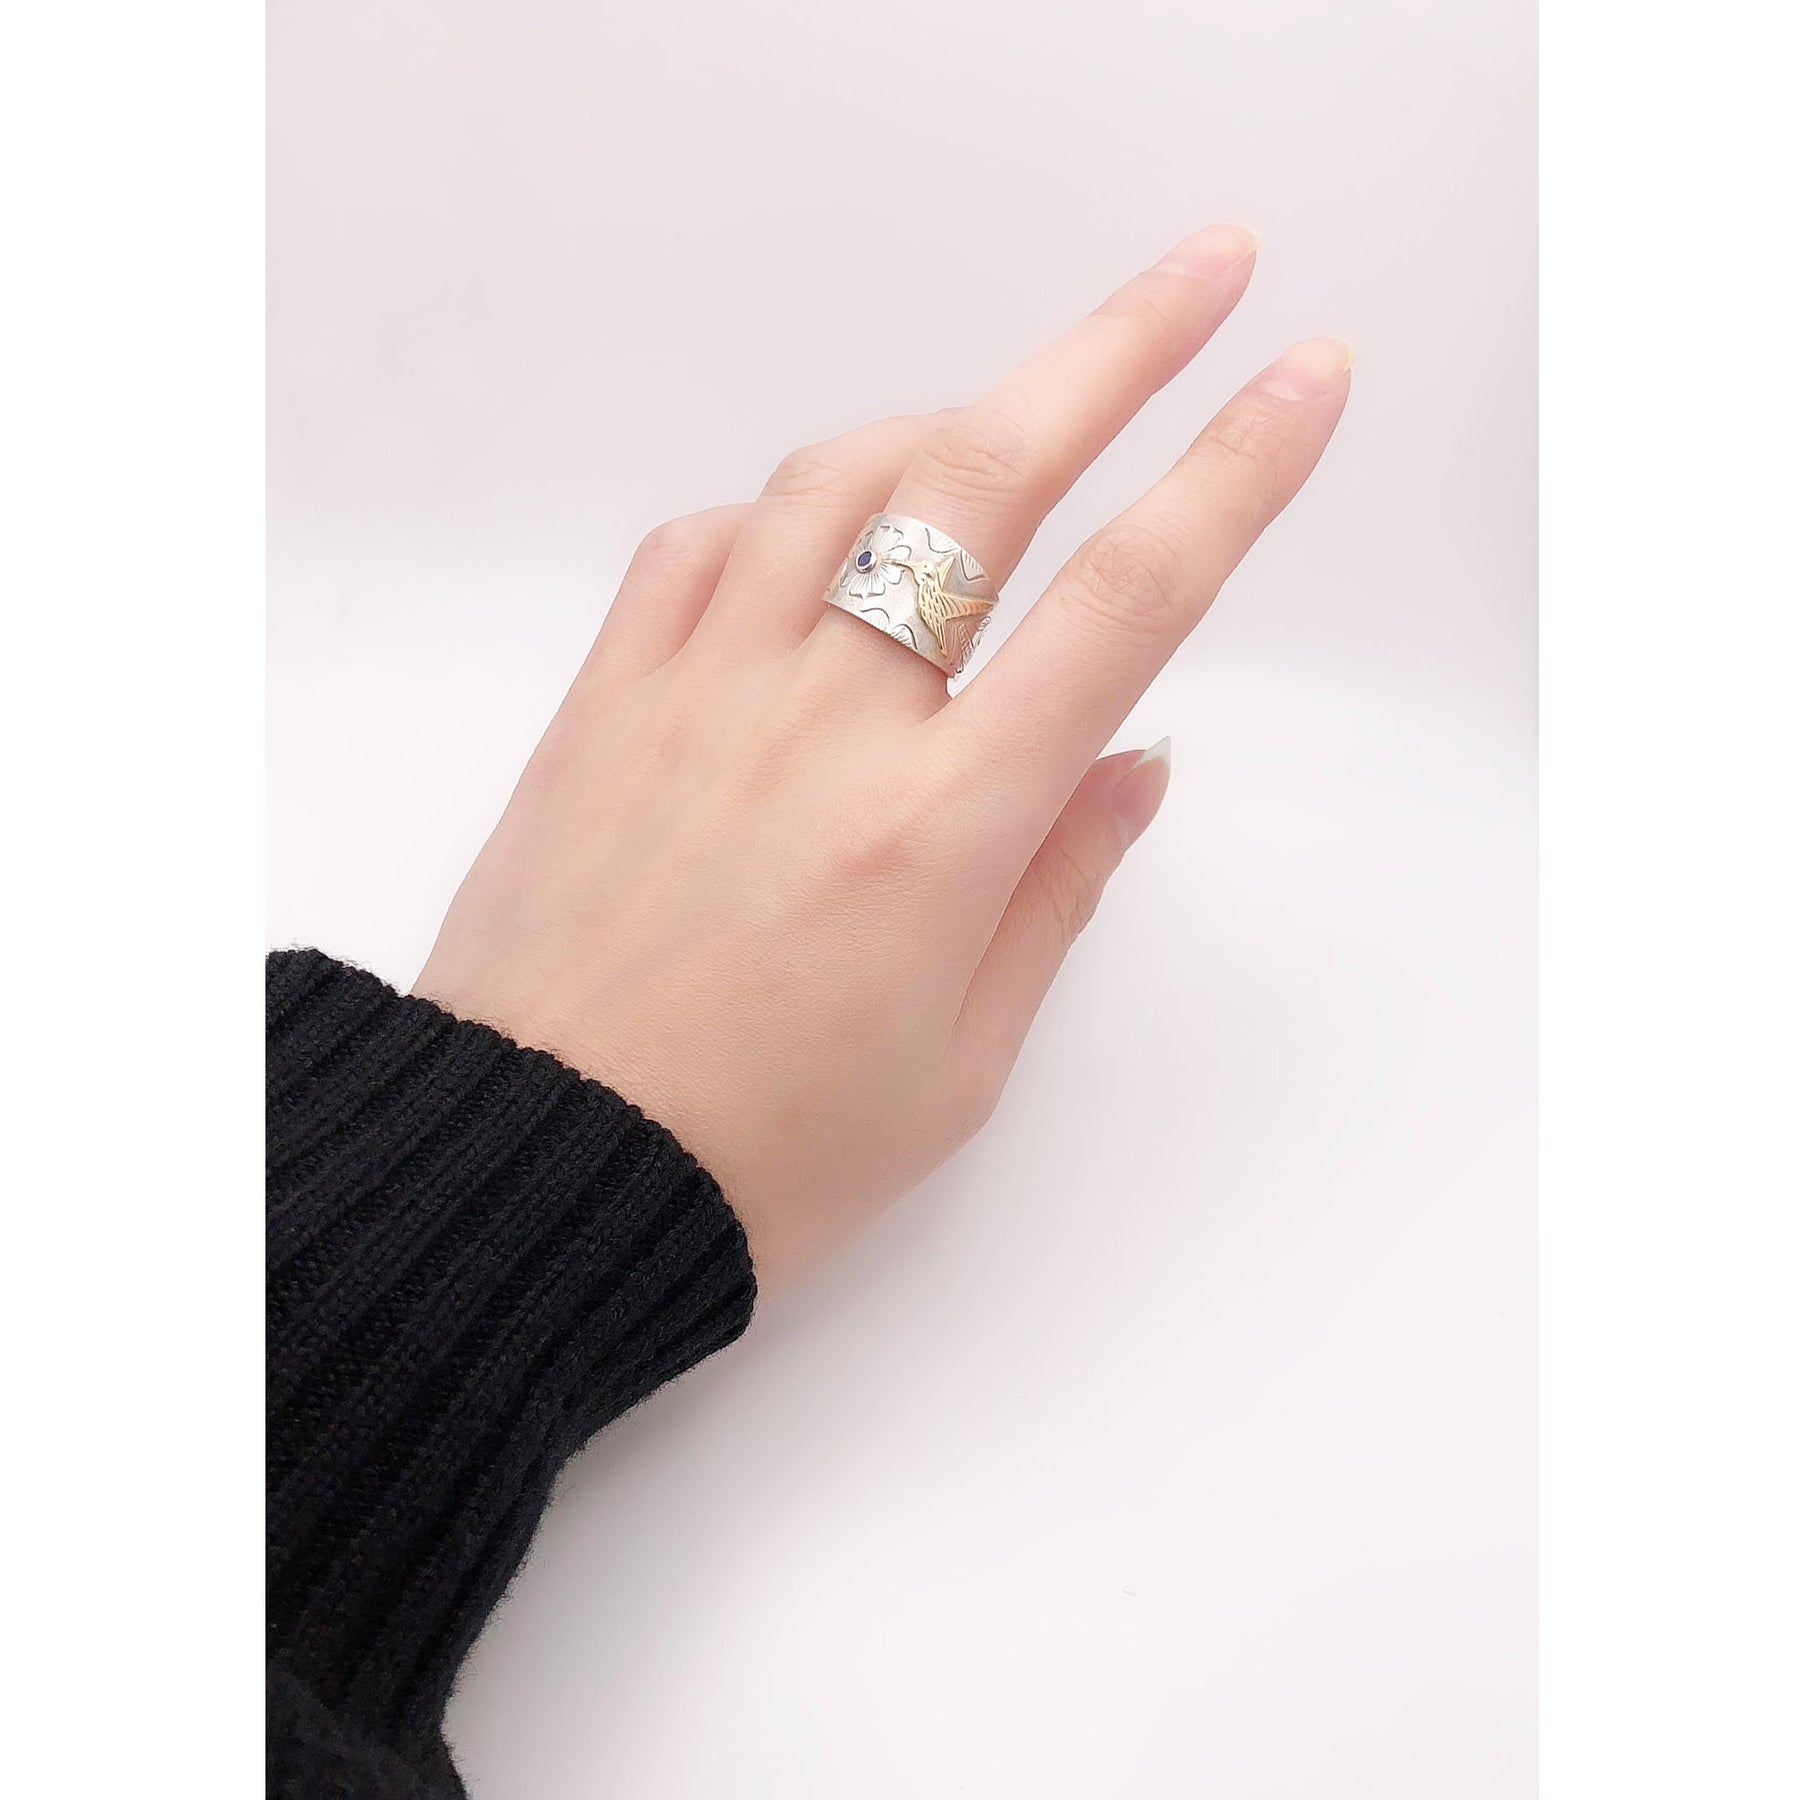 Hummingbird Ring with Sapphire